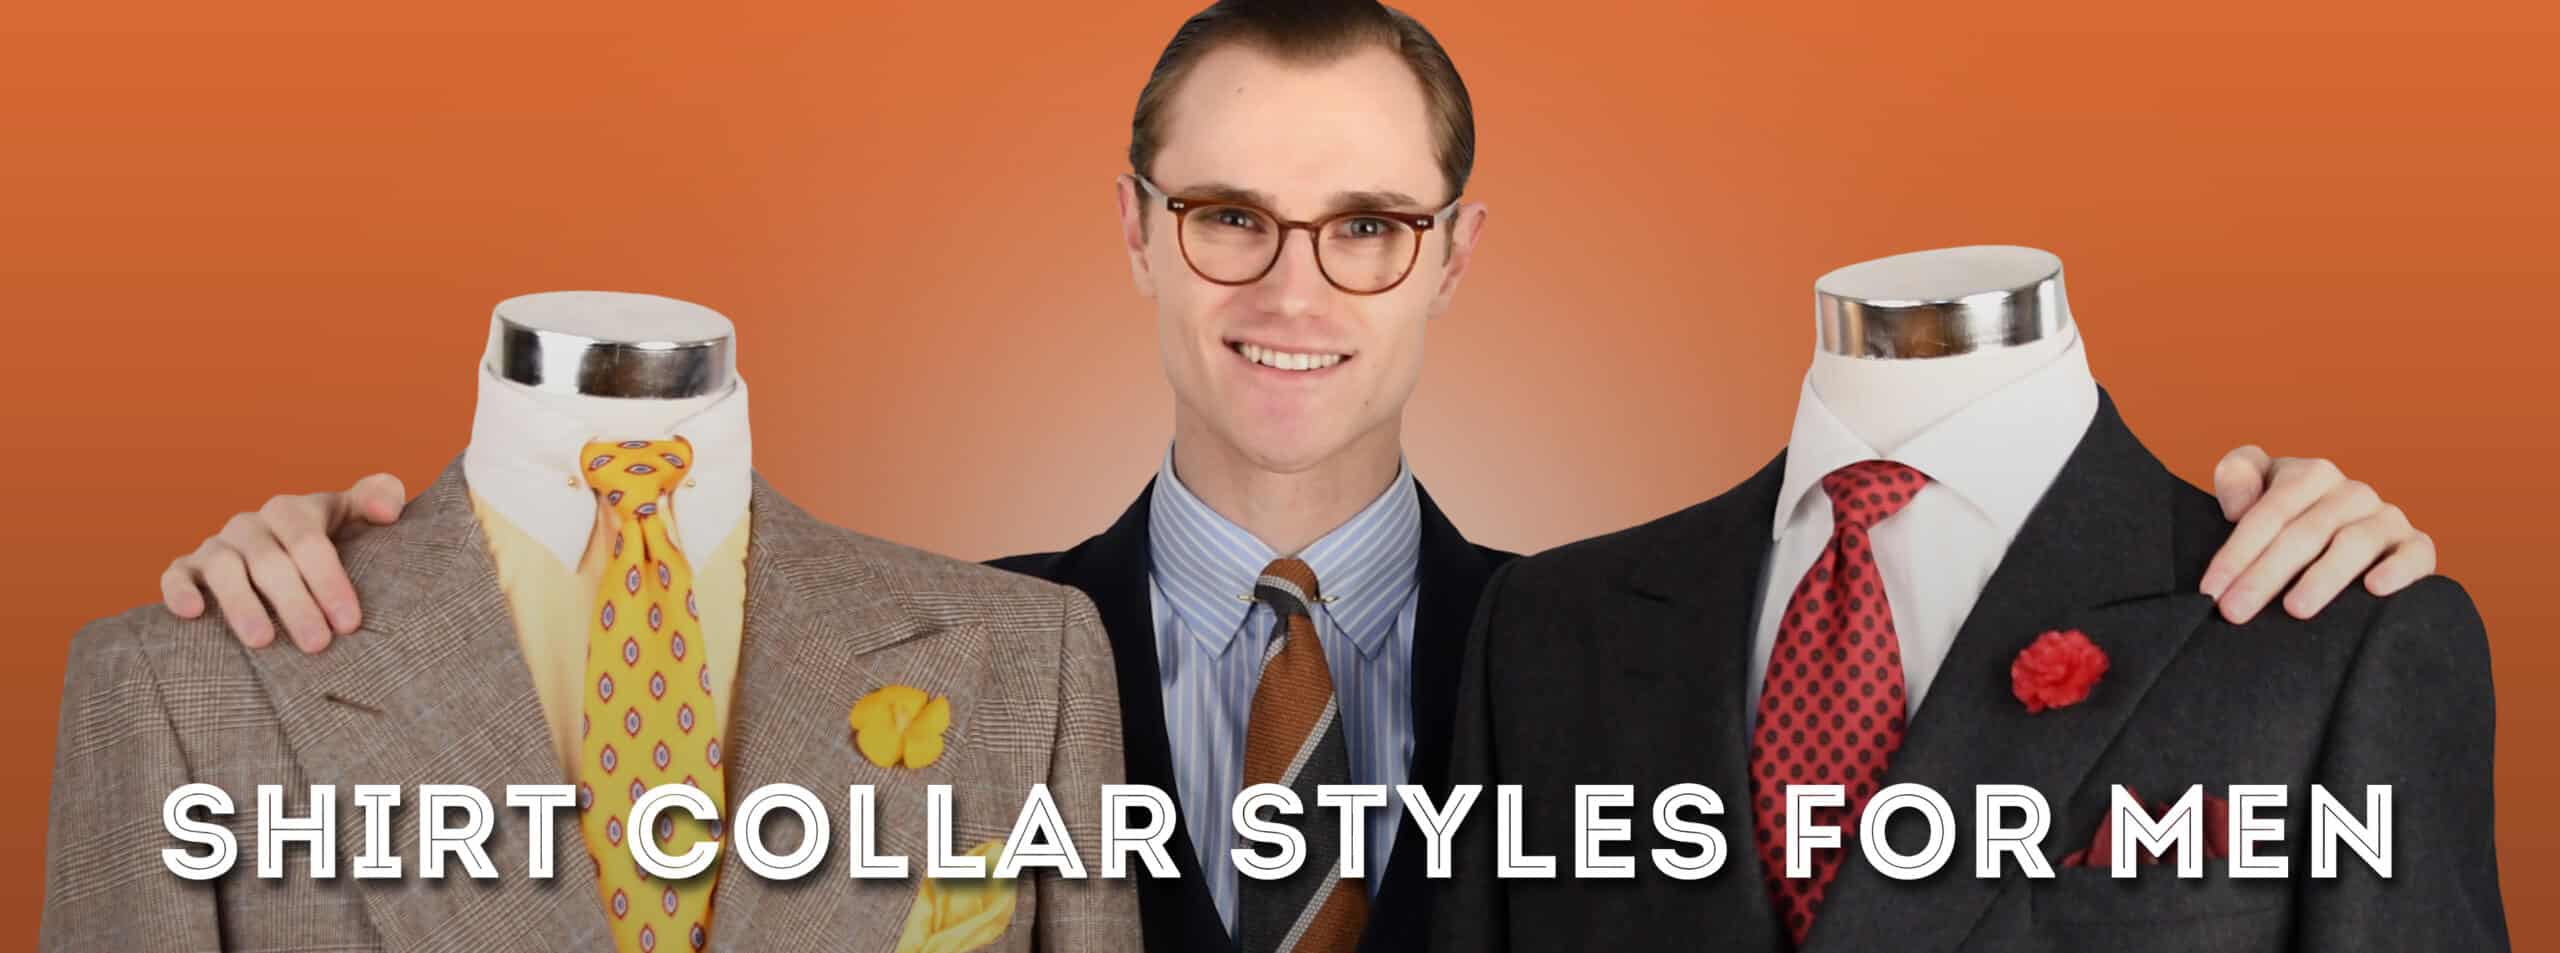 Atticus Prever Sin lugar a dudas Shirt Collar Styles For Men: A Complete Guide - Point, Cutaway & More